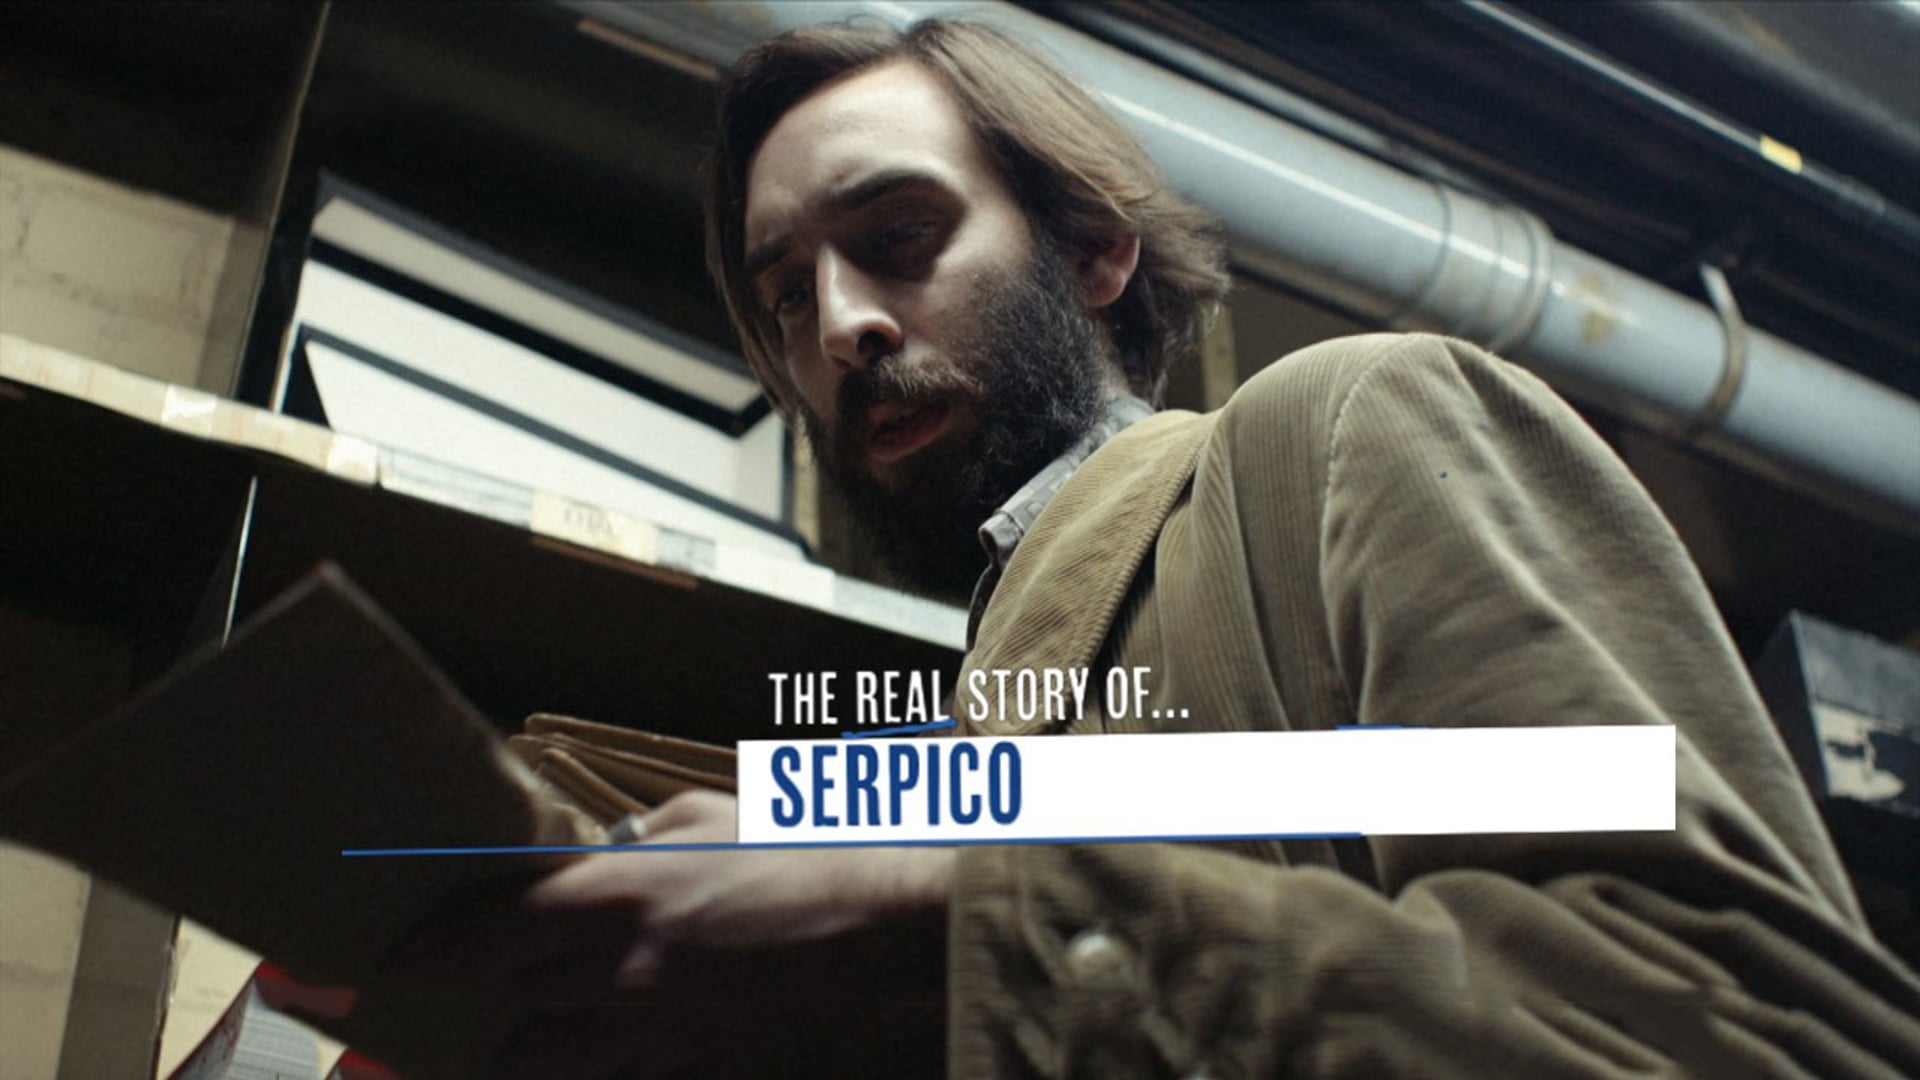 Real Story Of... SERPICO (Shoeshine scene)